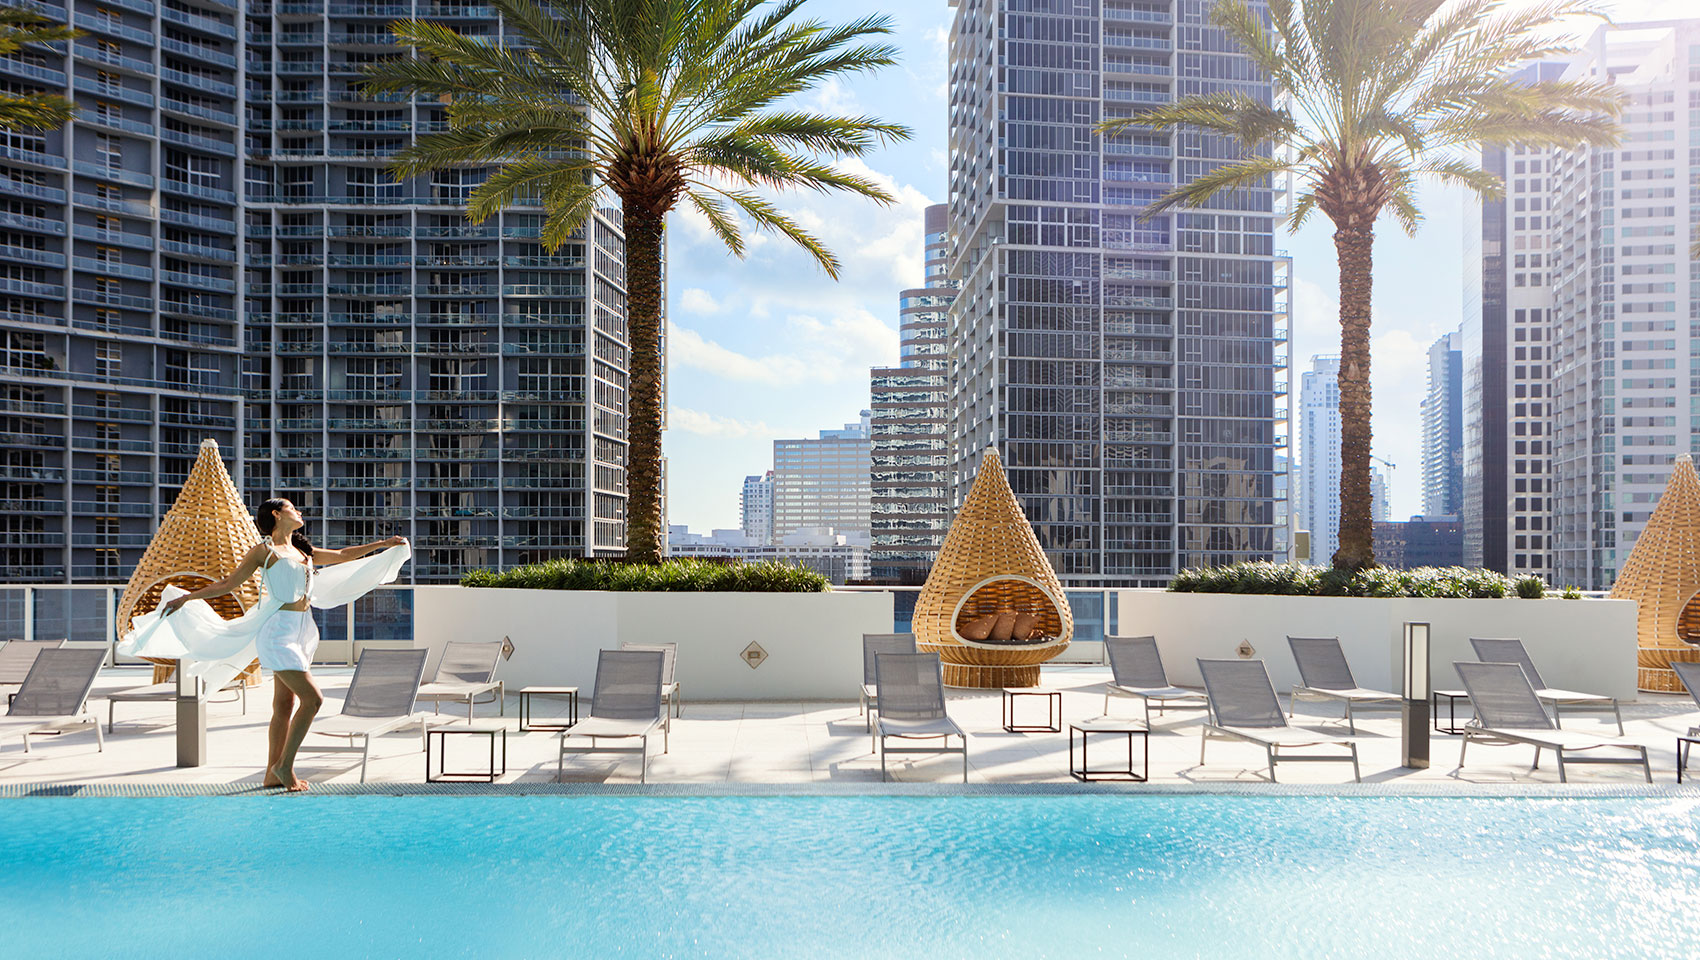 Rooftop pool overlooking Miami